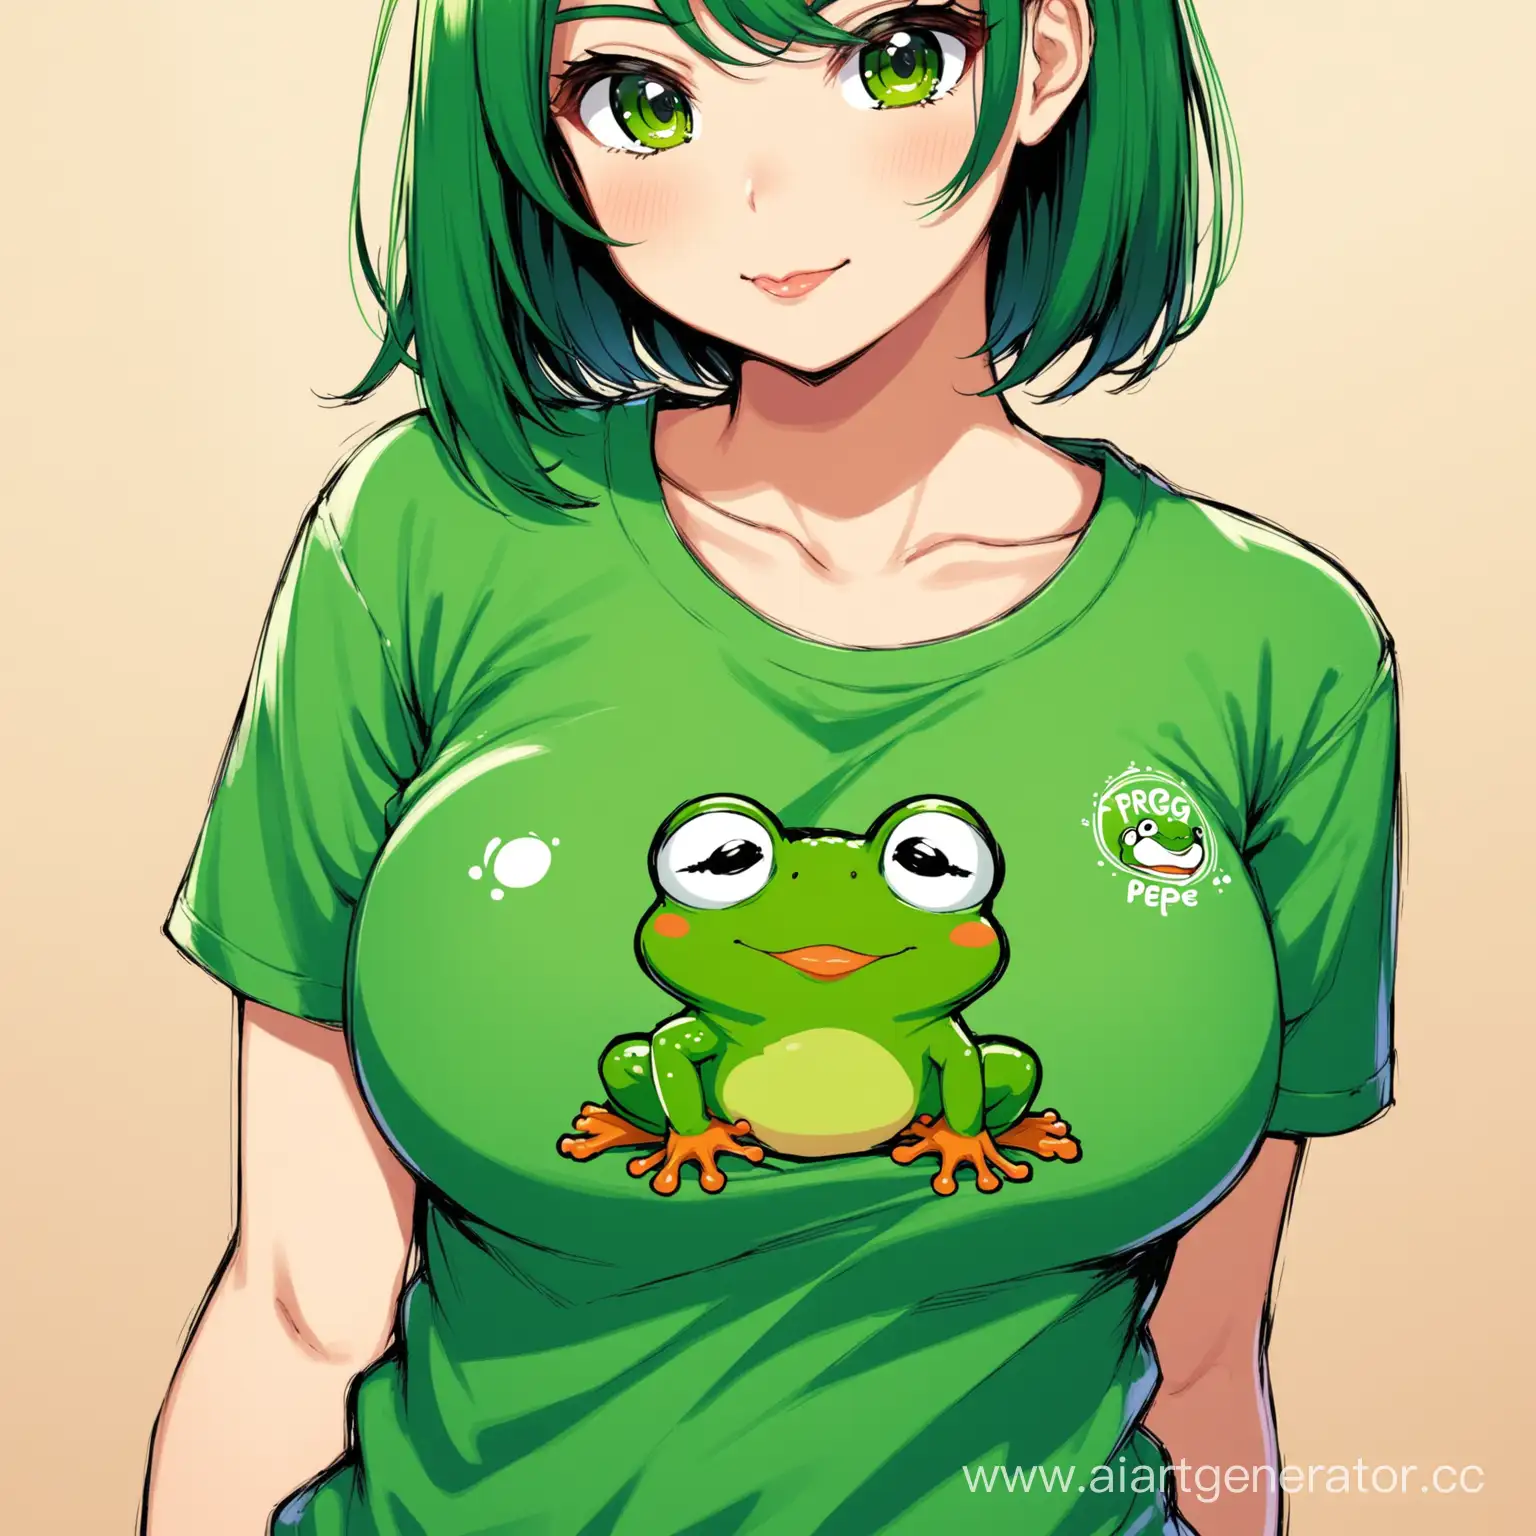 Anime-Girl-with-Pepe-Frog-TShirt-Playful-and-Vibrant-Character-Illustration